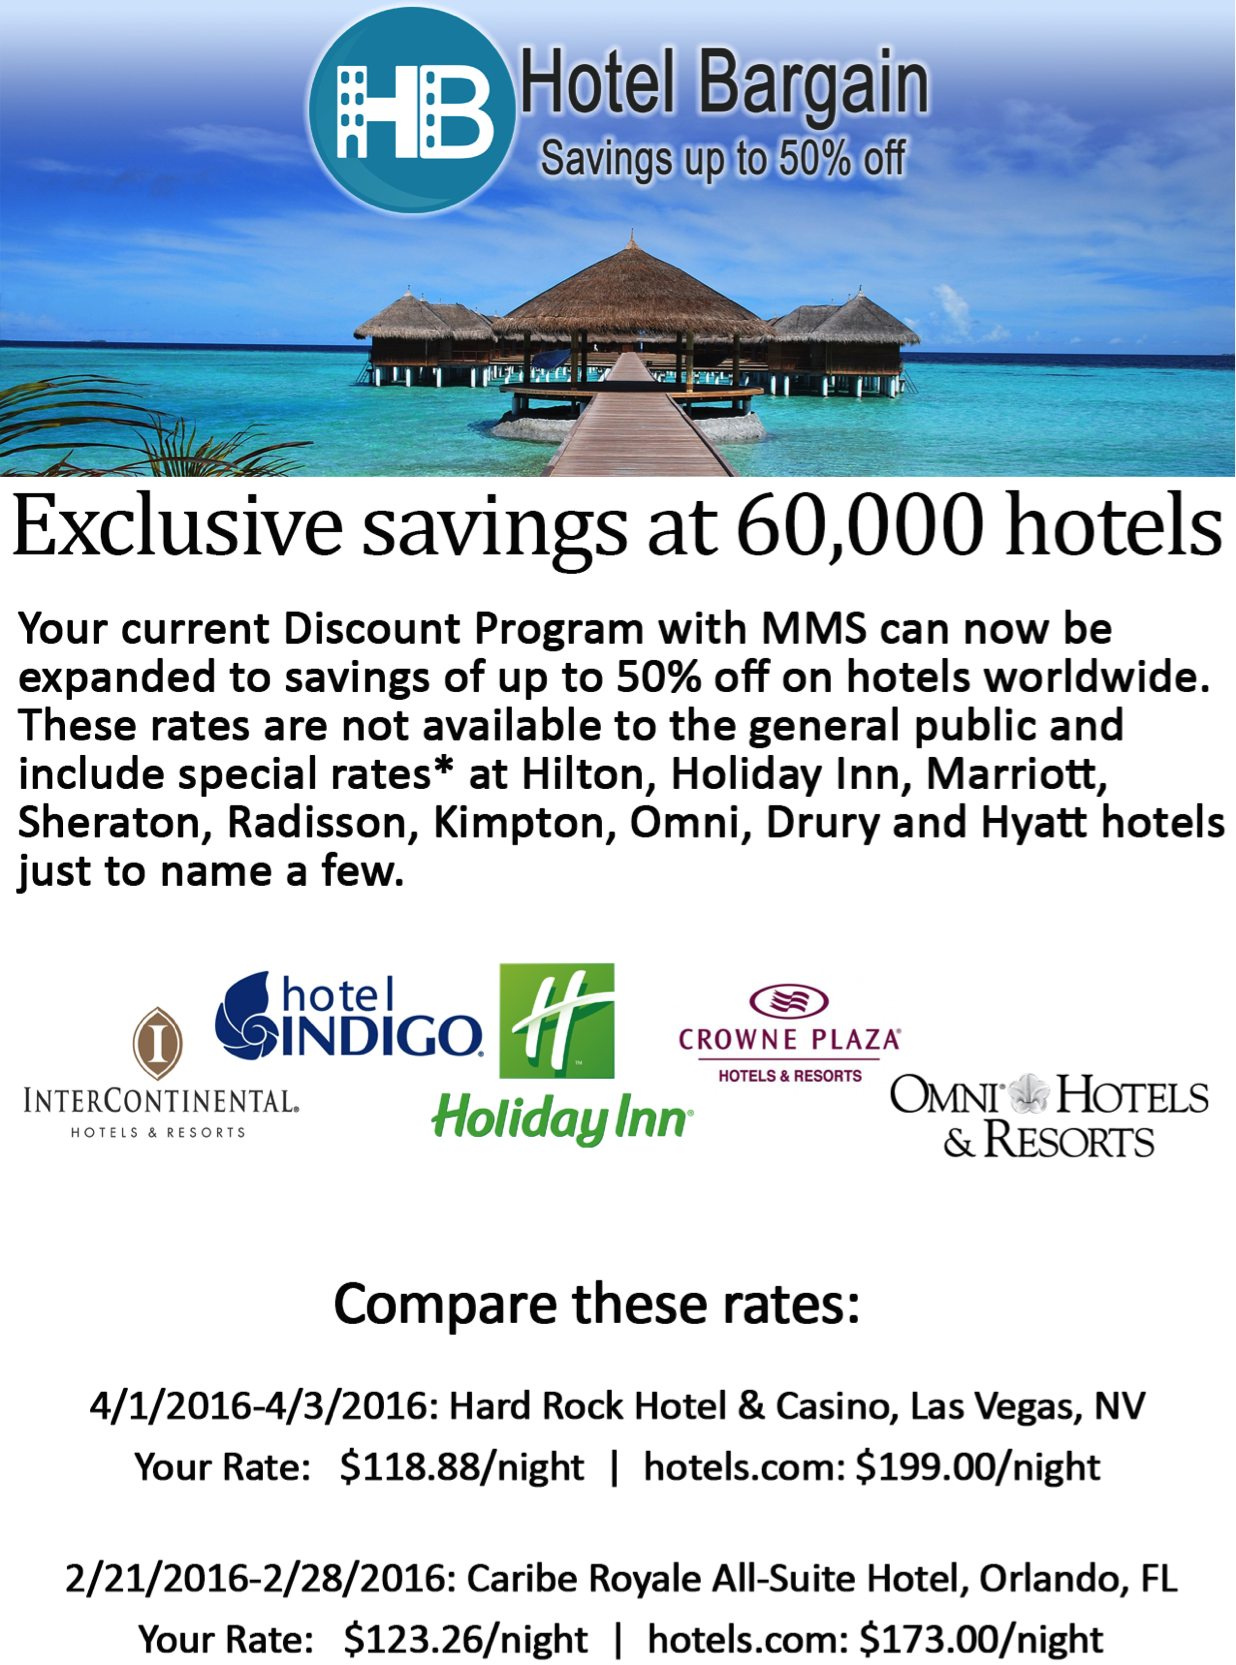 Hotel Bargains info